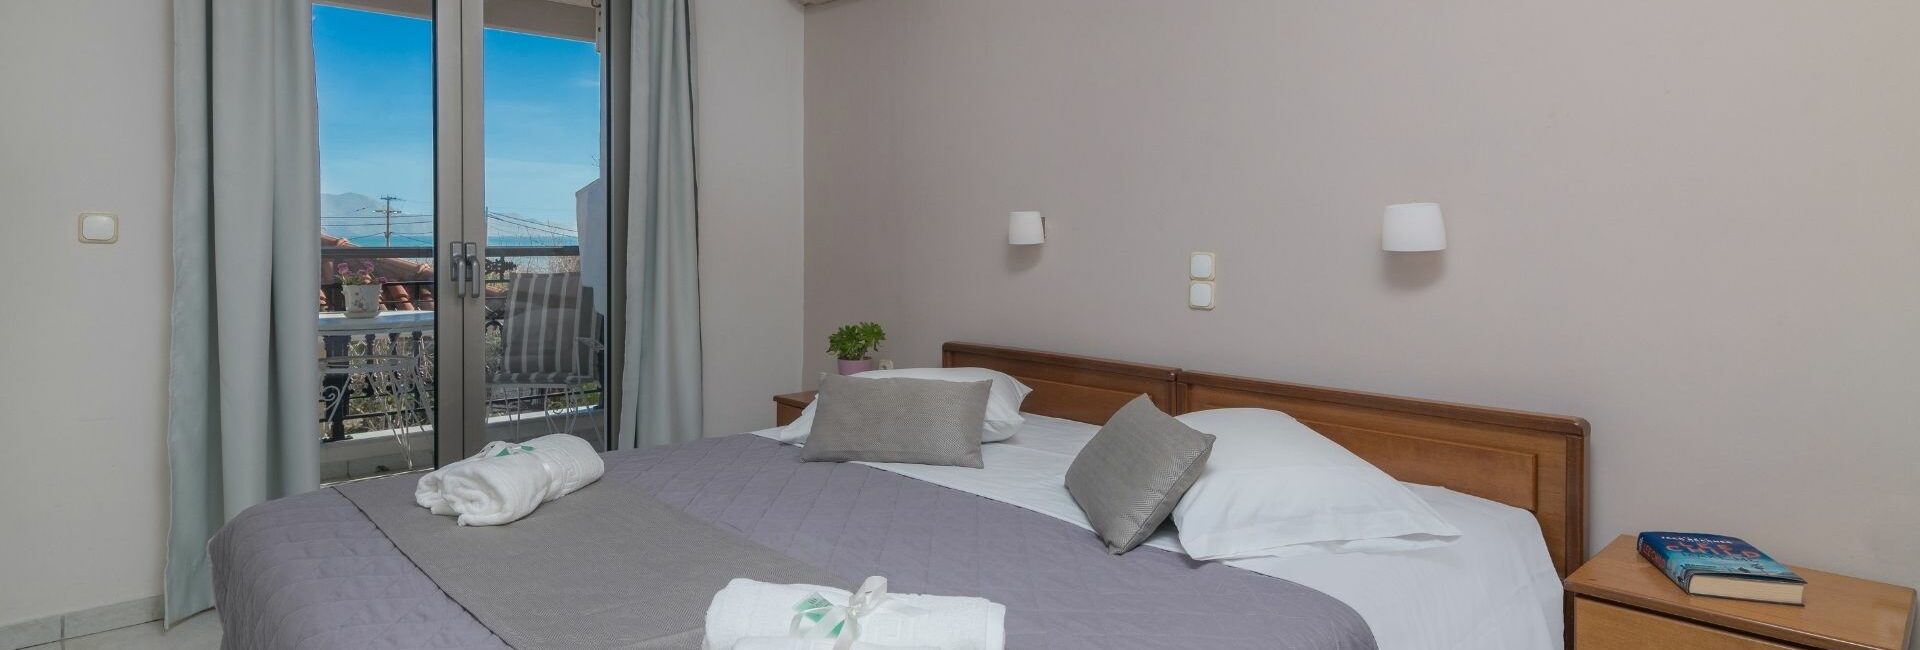 Standard Δίκλινο Δωμάτιο με 1 διπλό ή 2 μονά κρεβάτια με μπαλκόνι